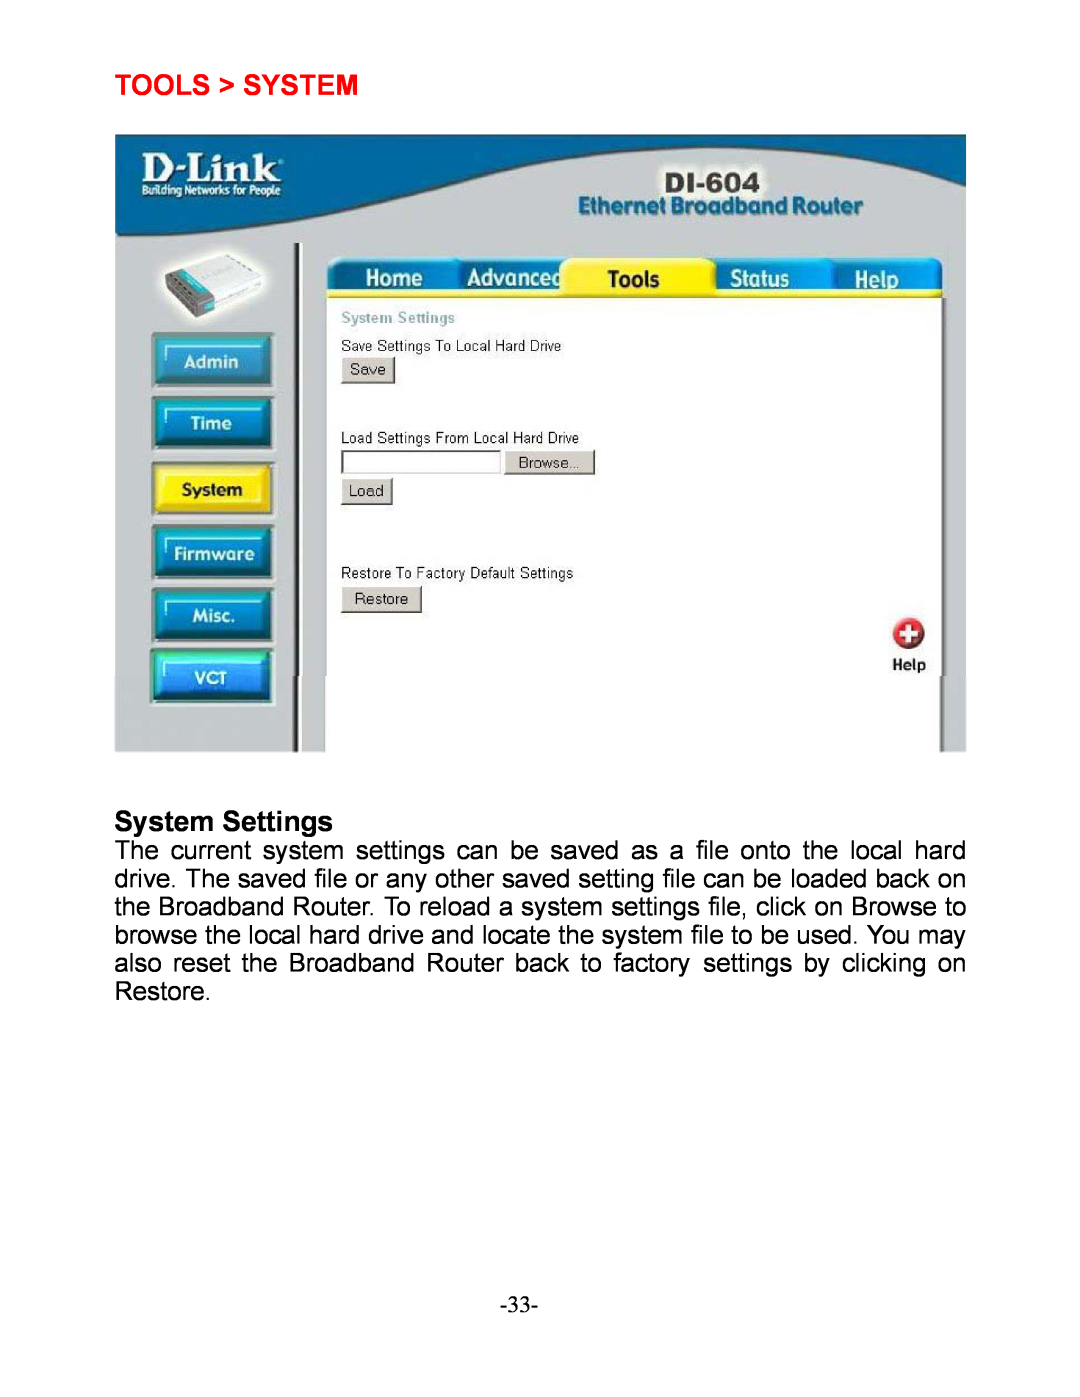 D-Link DI-604 manual Tools System, System Settings 